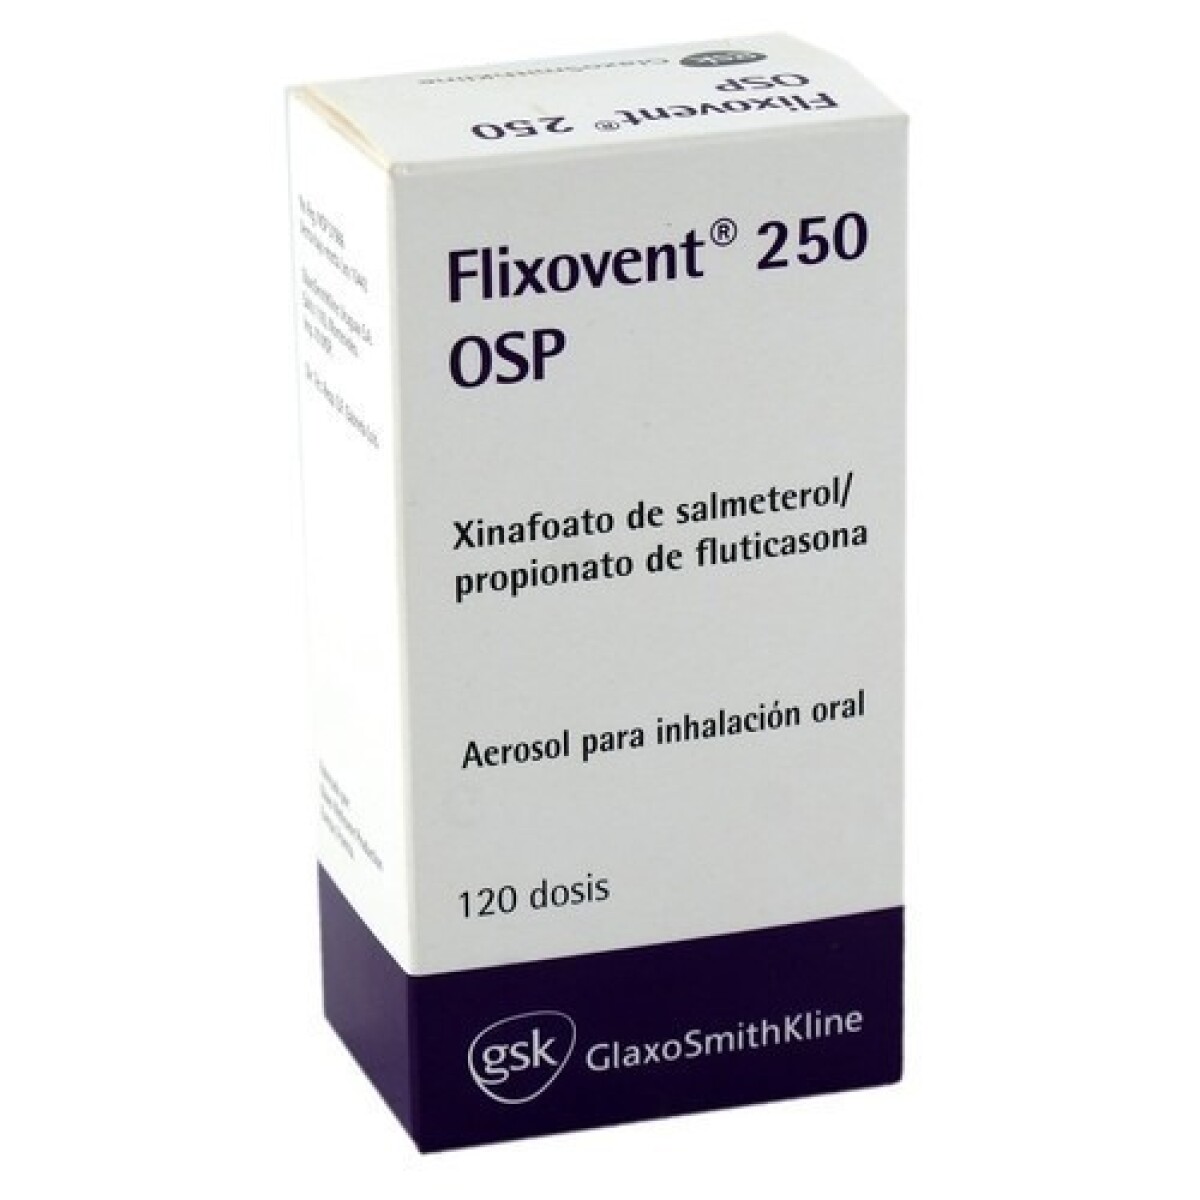 Flixovent 250 Osp 120 Dosis 